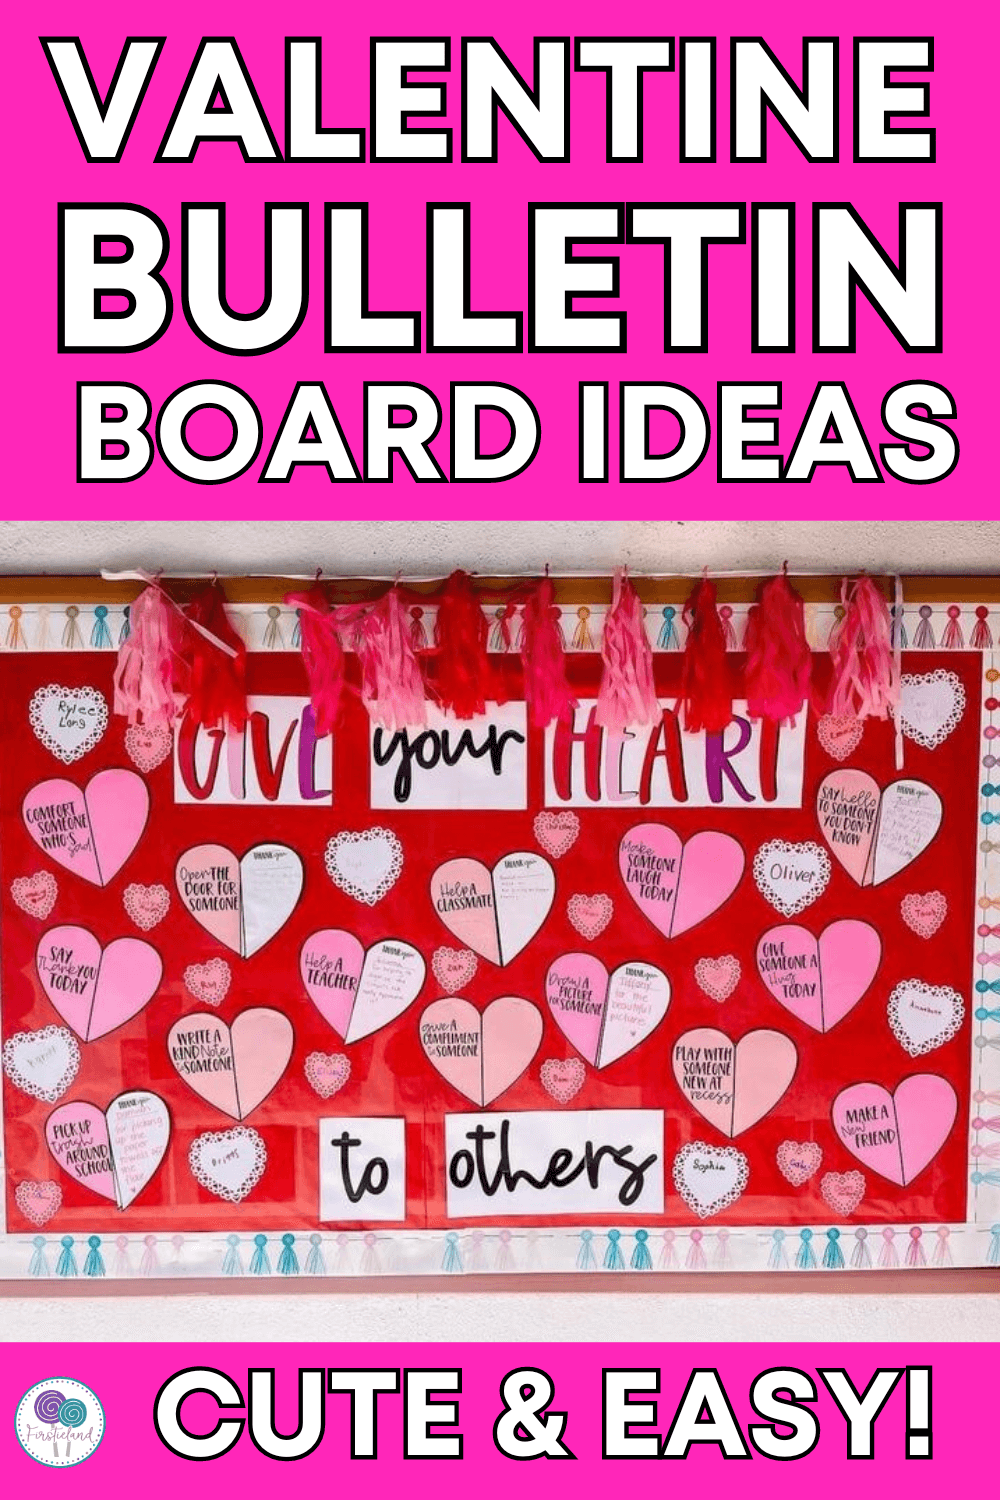 17 Cute And Easy Valentine's Day Bulletin Board Ideas - Firstieland ...